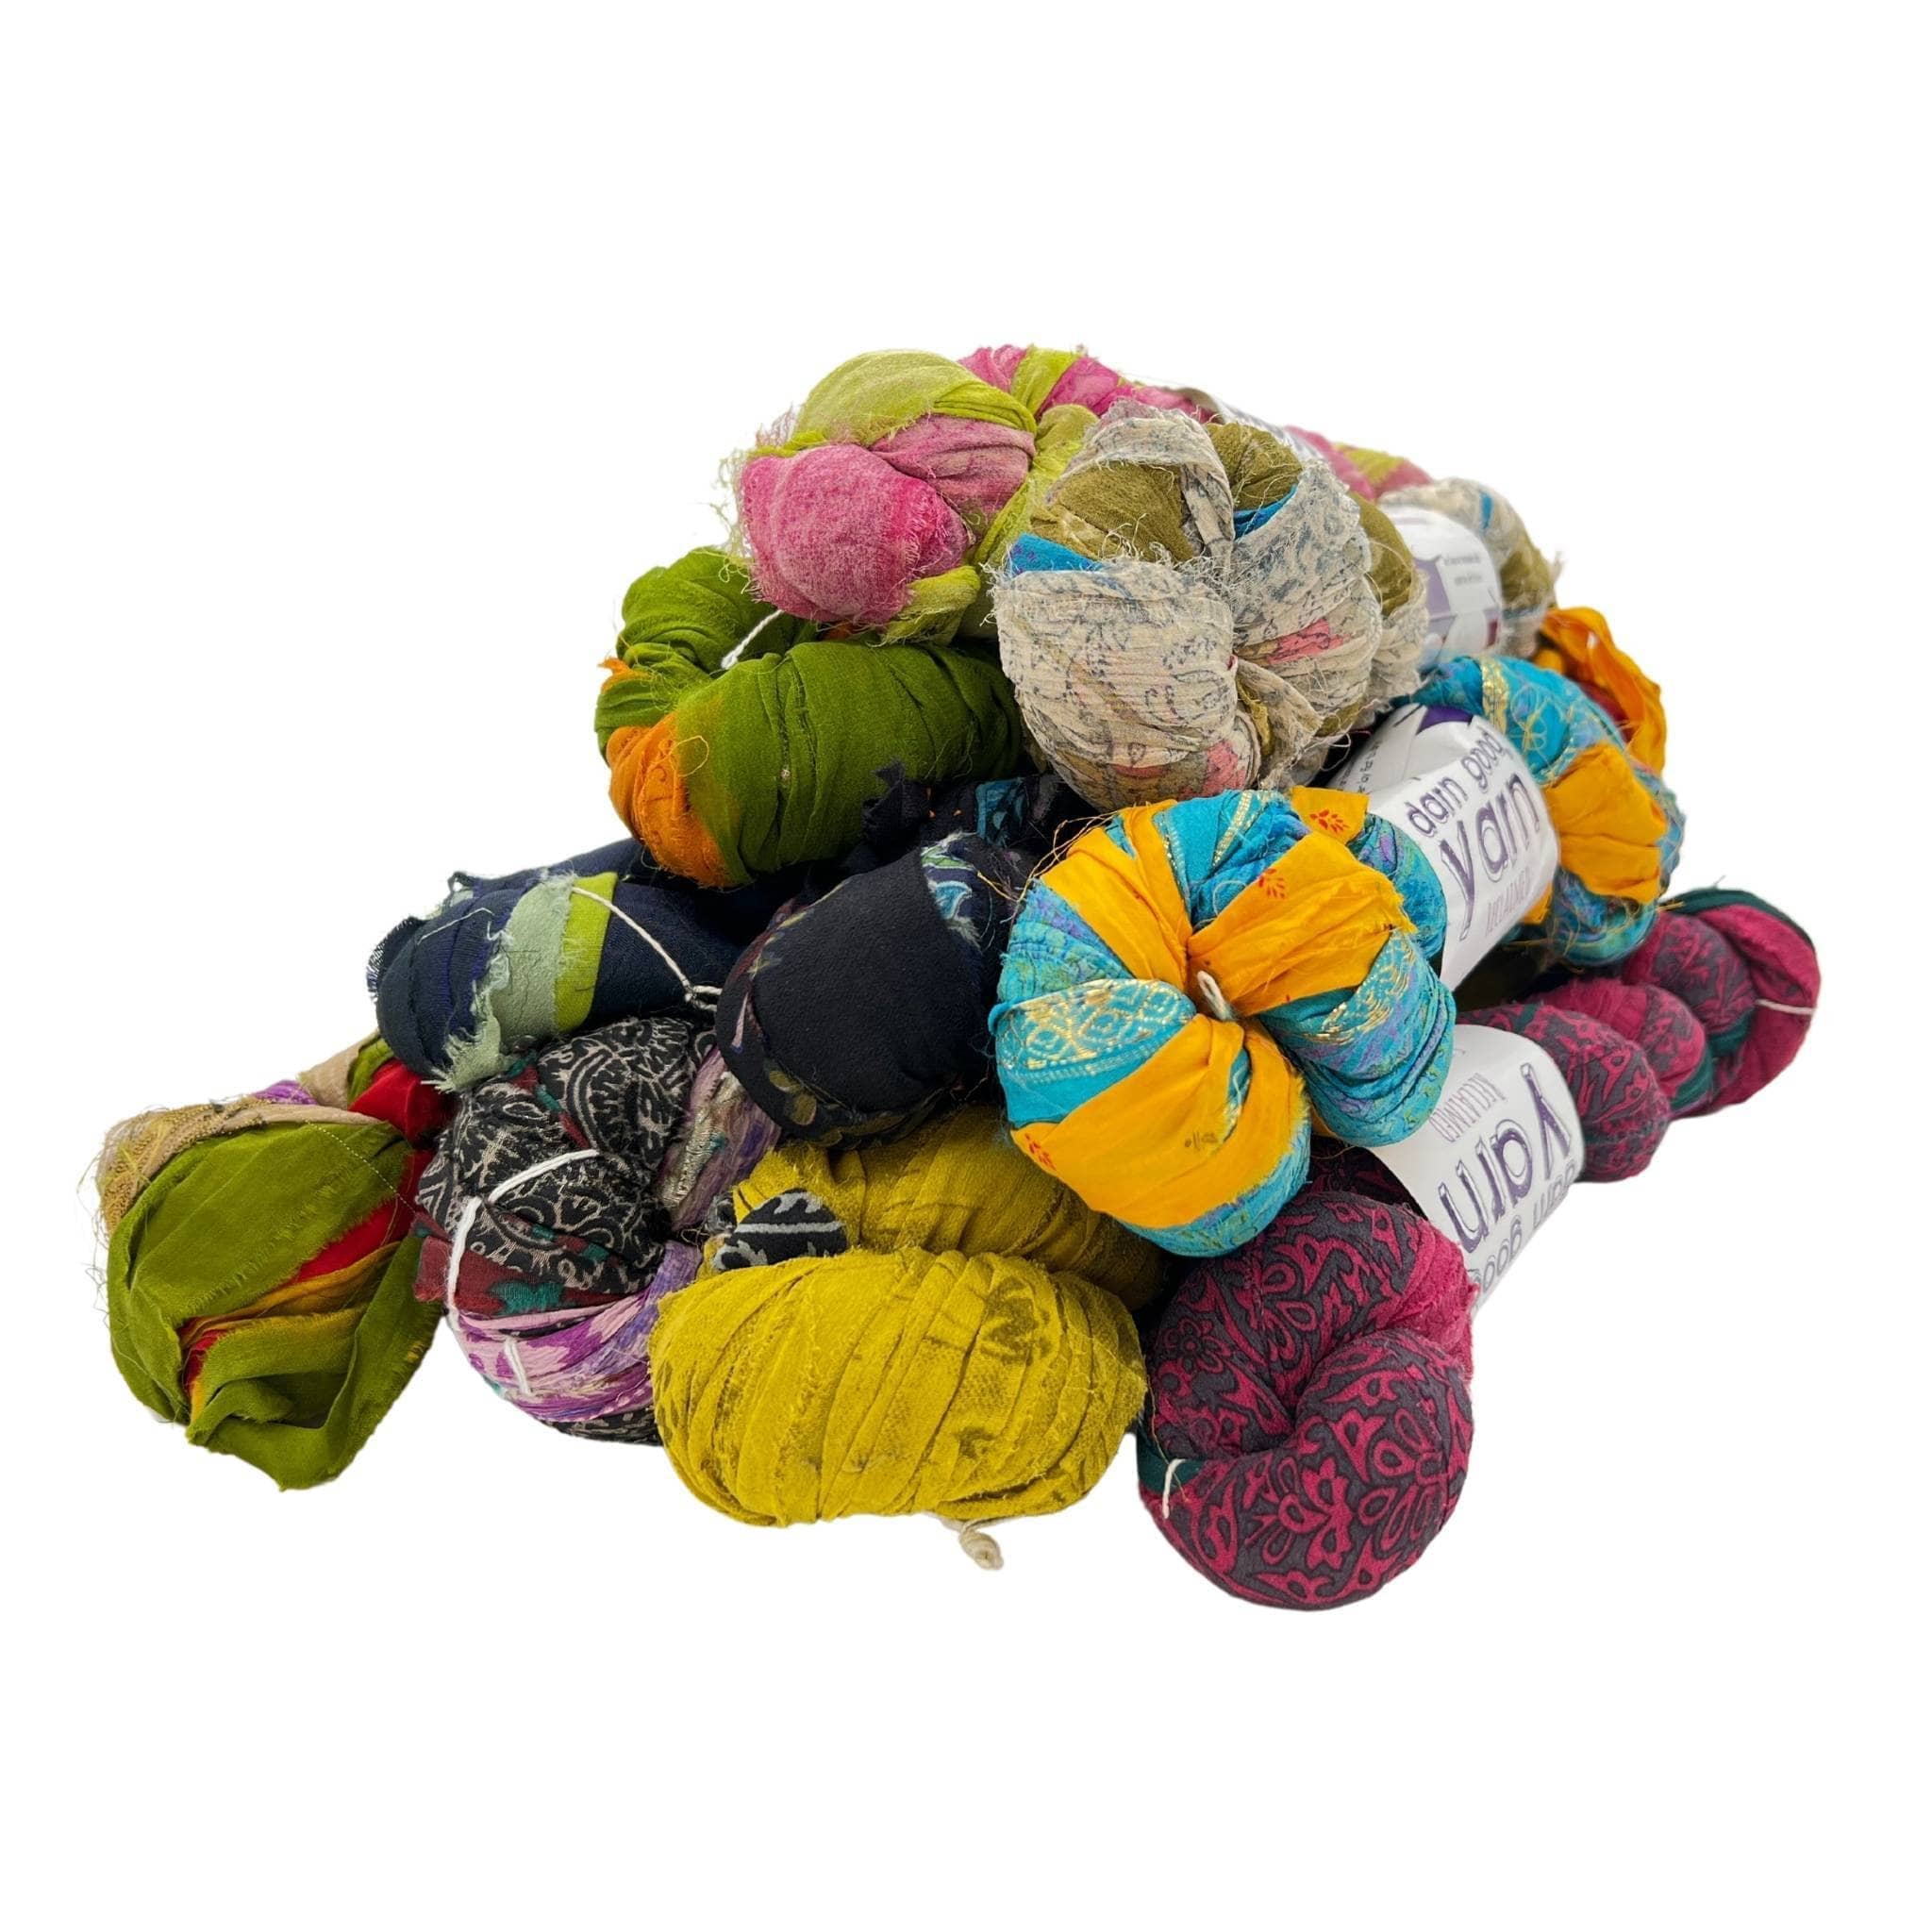 Yarn Lovers 10 Pack Bulk Yarn Bundle - Bulky Weight Alpaca Wool Blend Yarn High and Dry